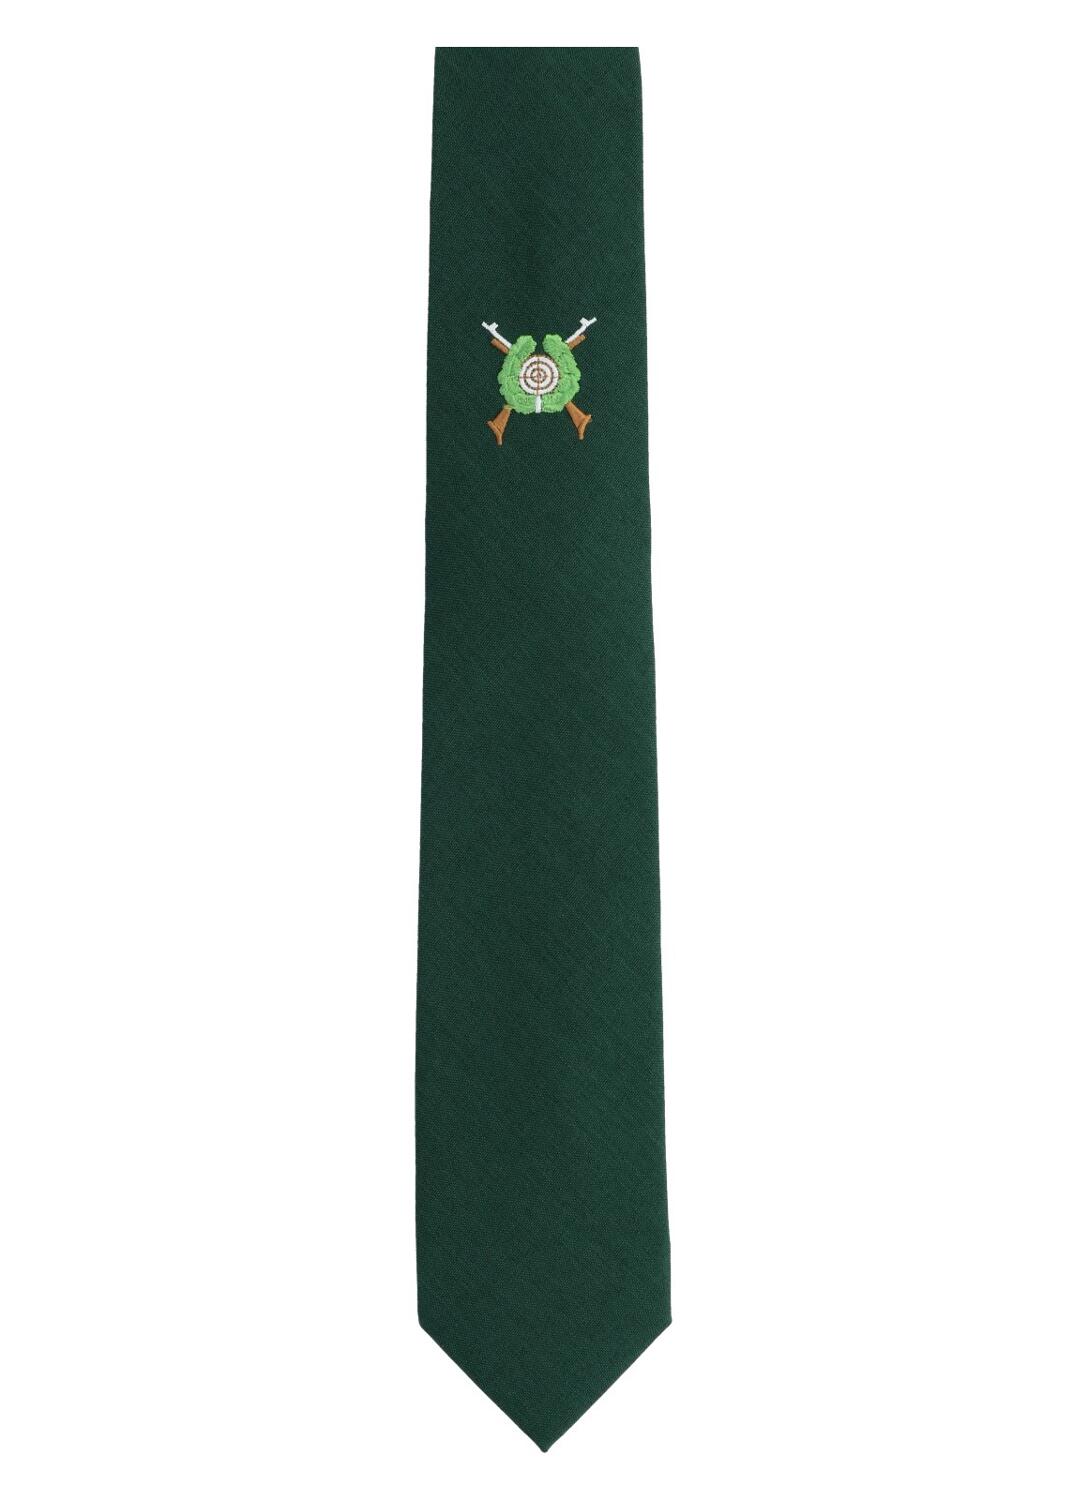 Hemd,Krawatte | Willen grün,Krawatte Schützenkrawatte,Krawatte,Krawatte Anzug Deutschland